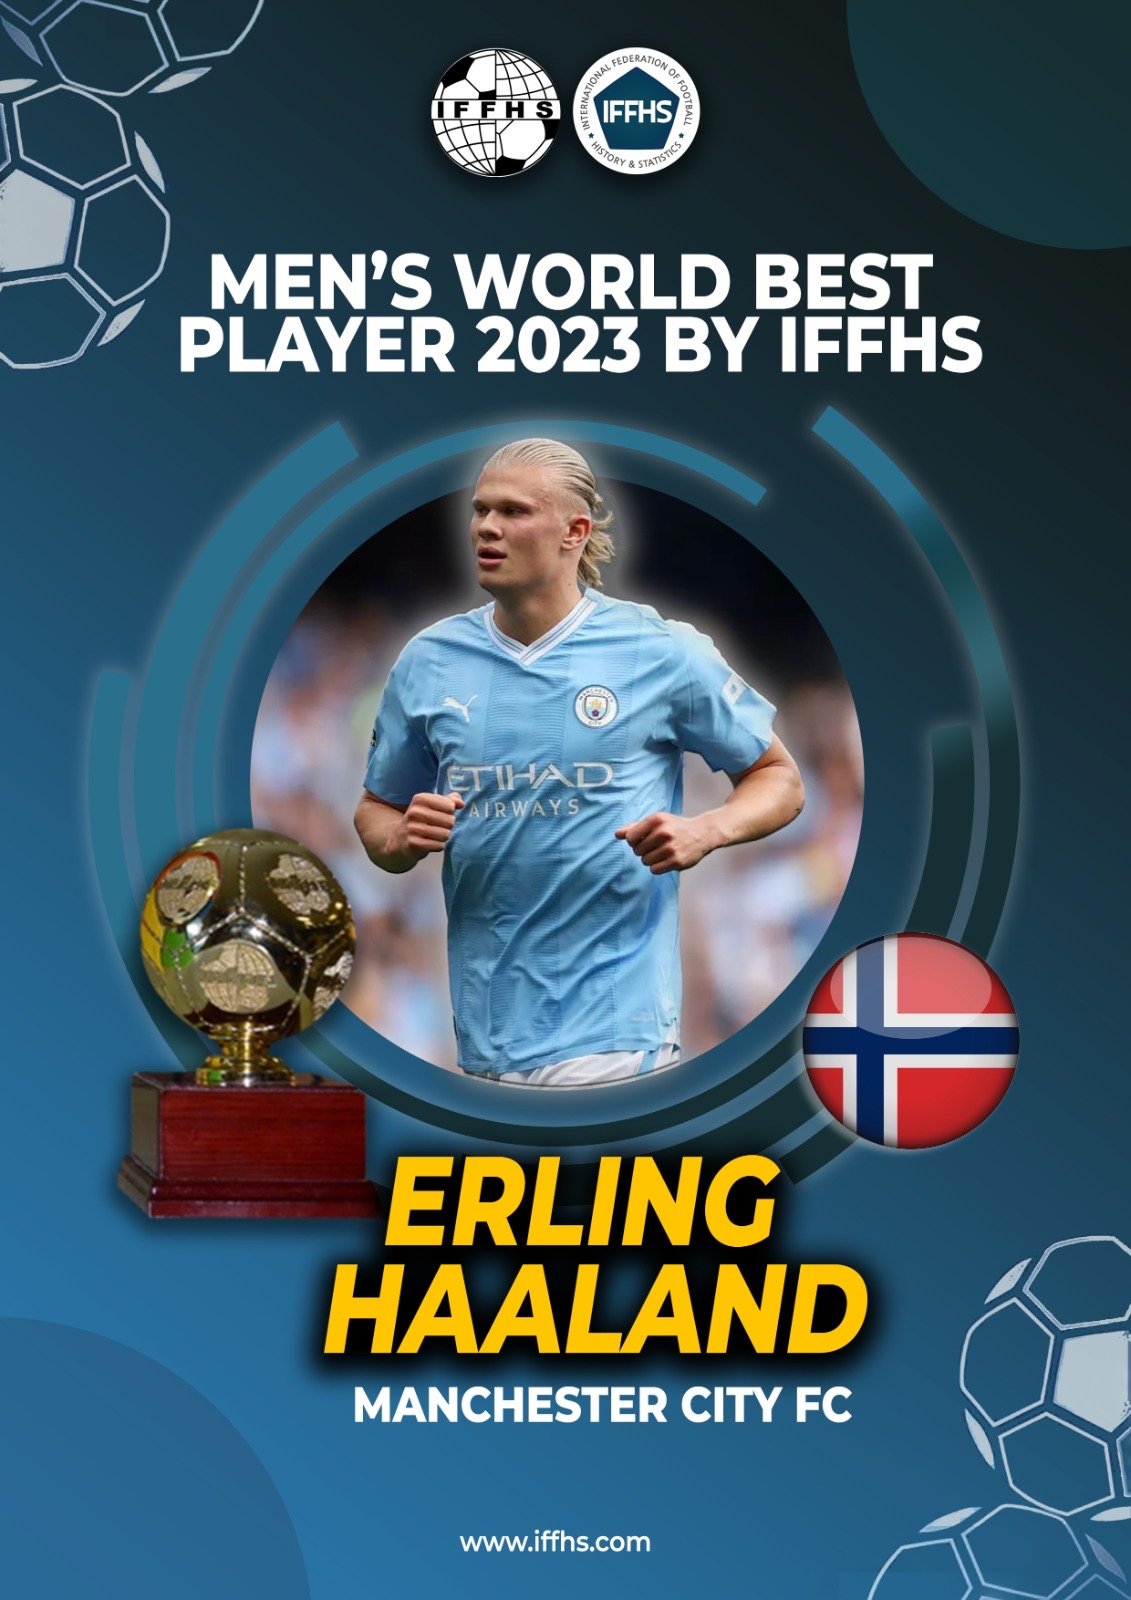 Erling Haaland wins the Men's World Best Player 2023 award. /IFFHS